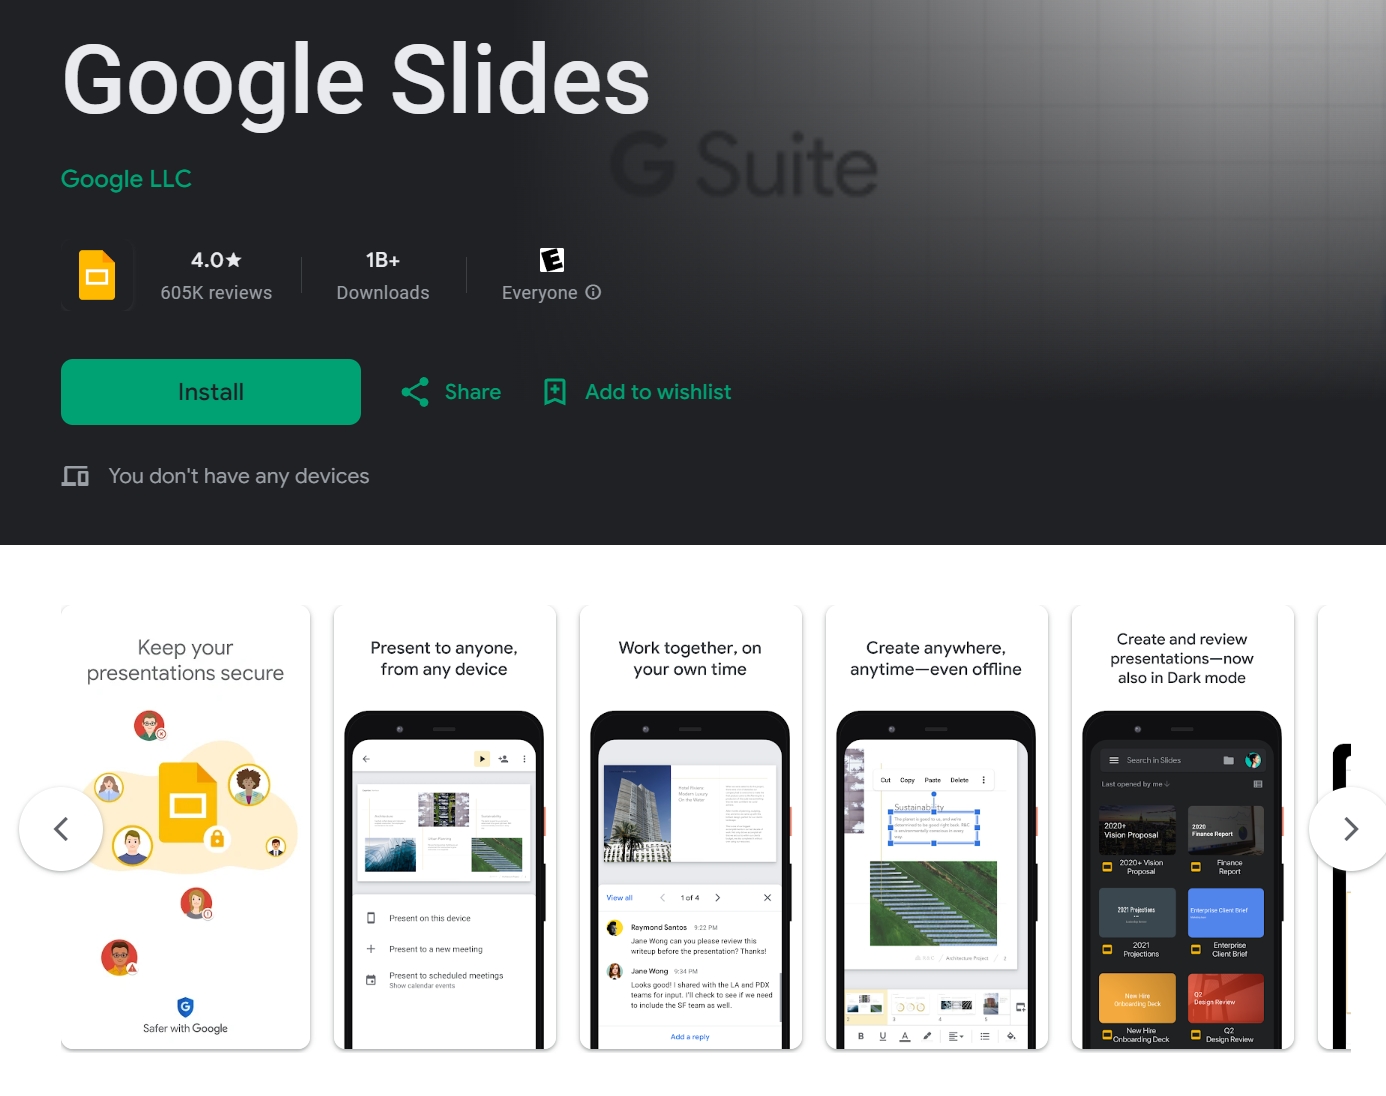 keynote for android Google Slides